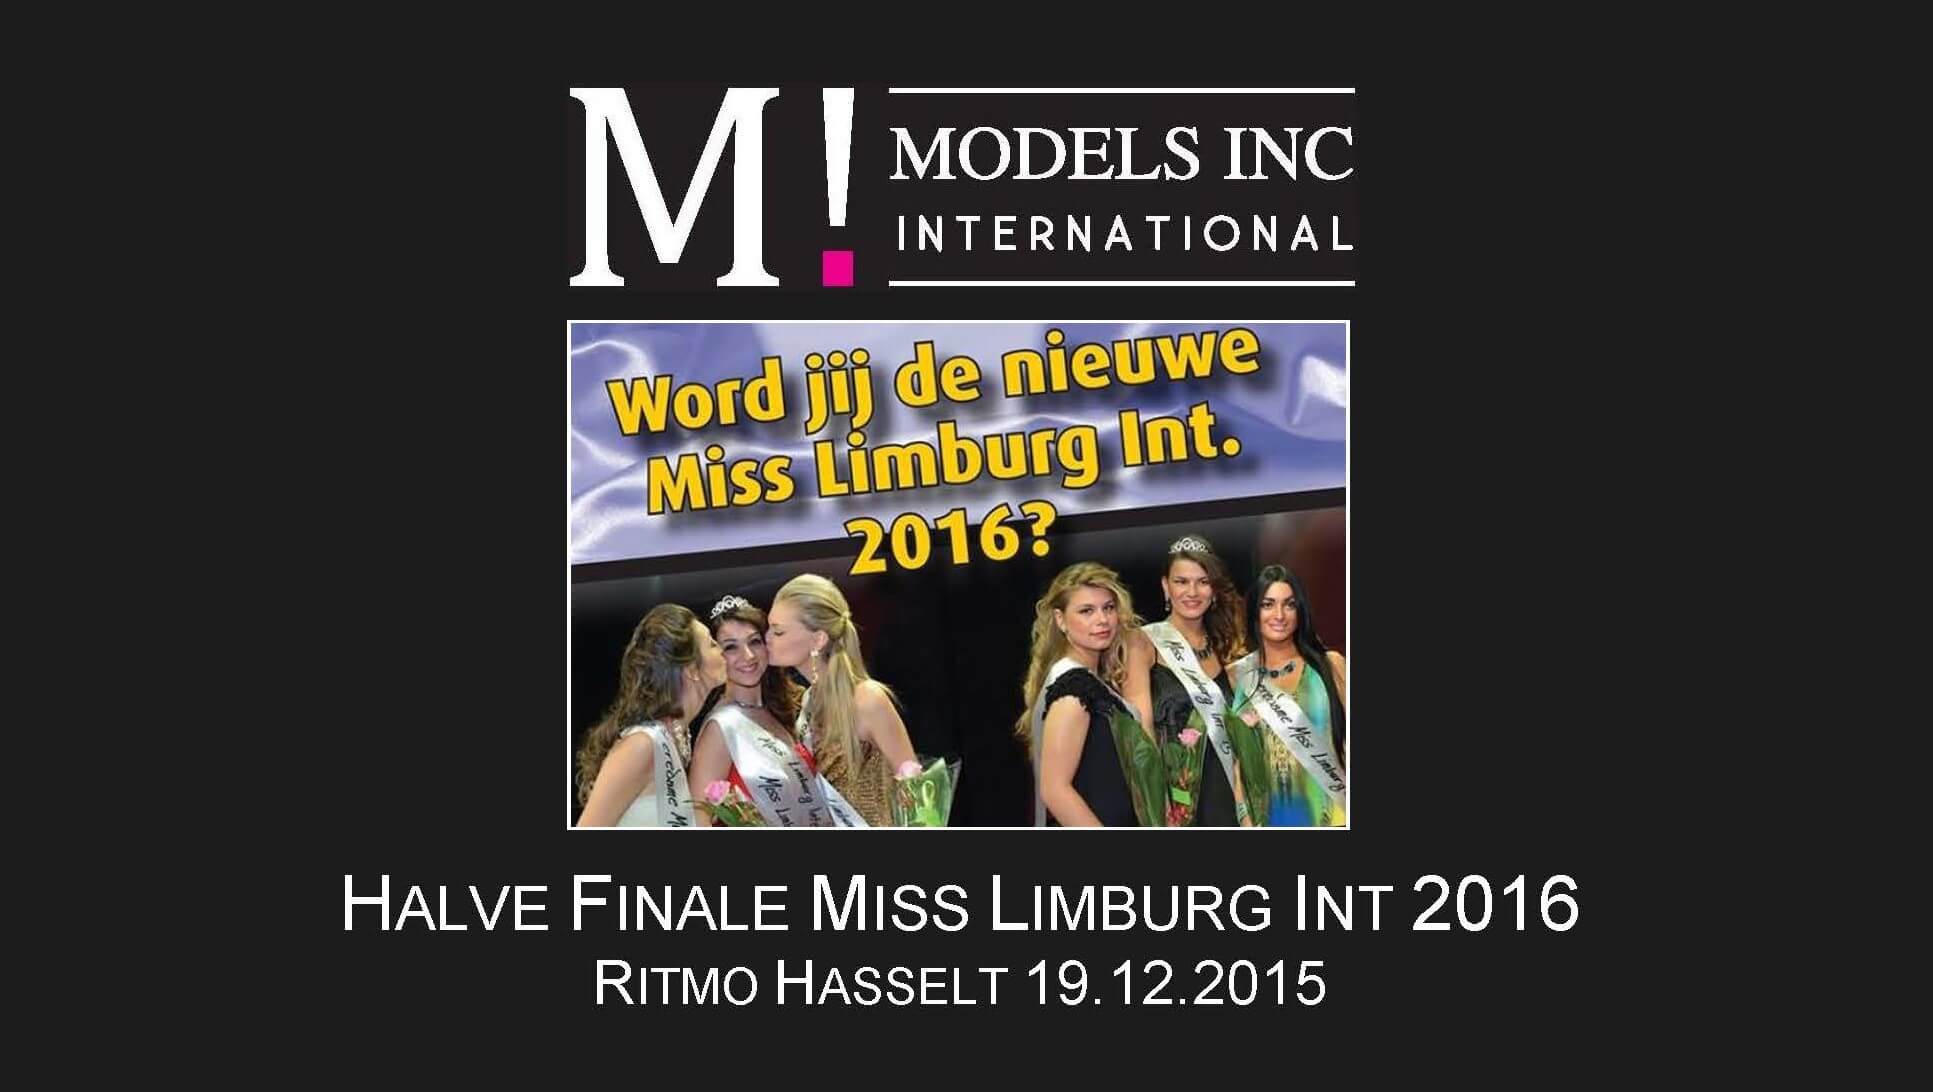 Halve finale Miss Limburg International 2016